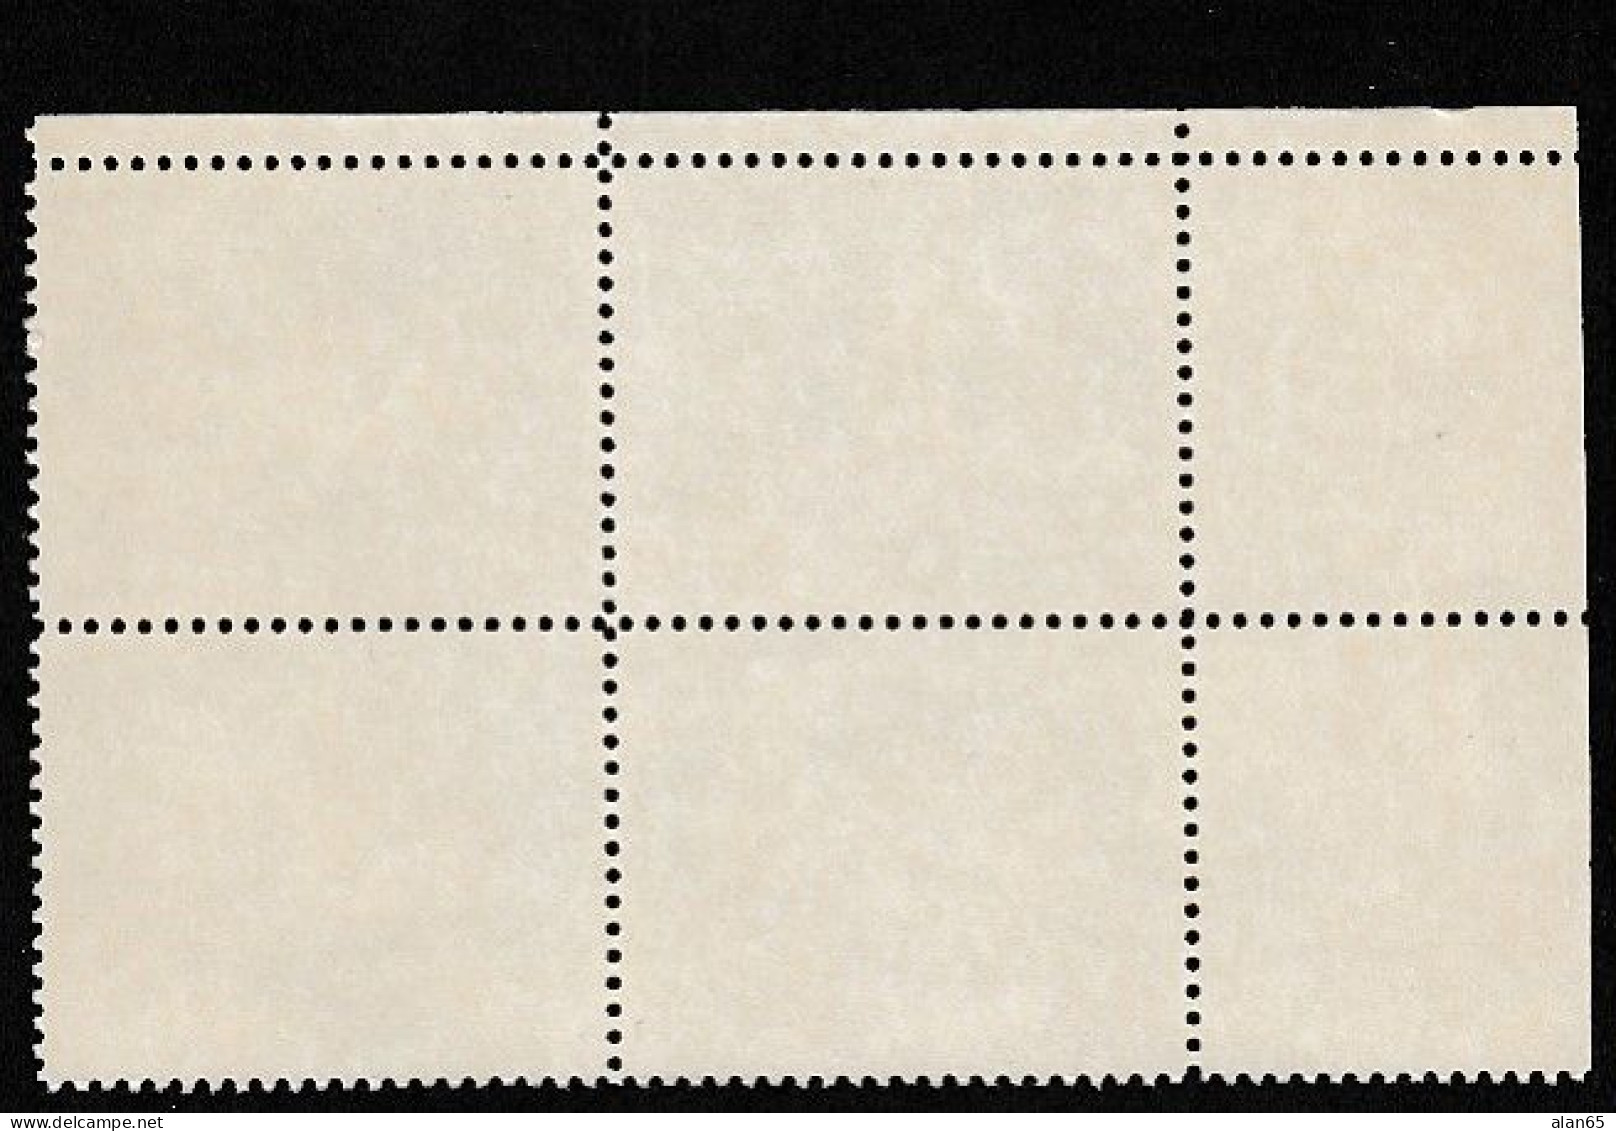 Sc#2420, Letter Carriers 25-cent 1989 Issue, Plate # Block Of 4 MNH US Postage Stamps - Números De Placas